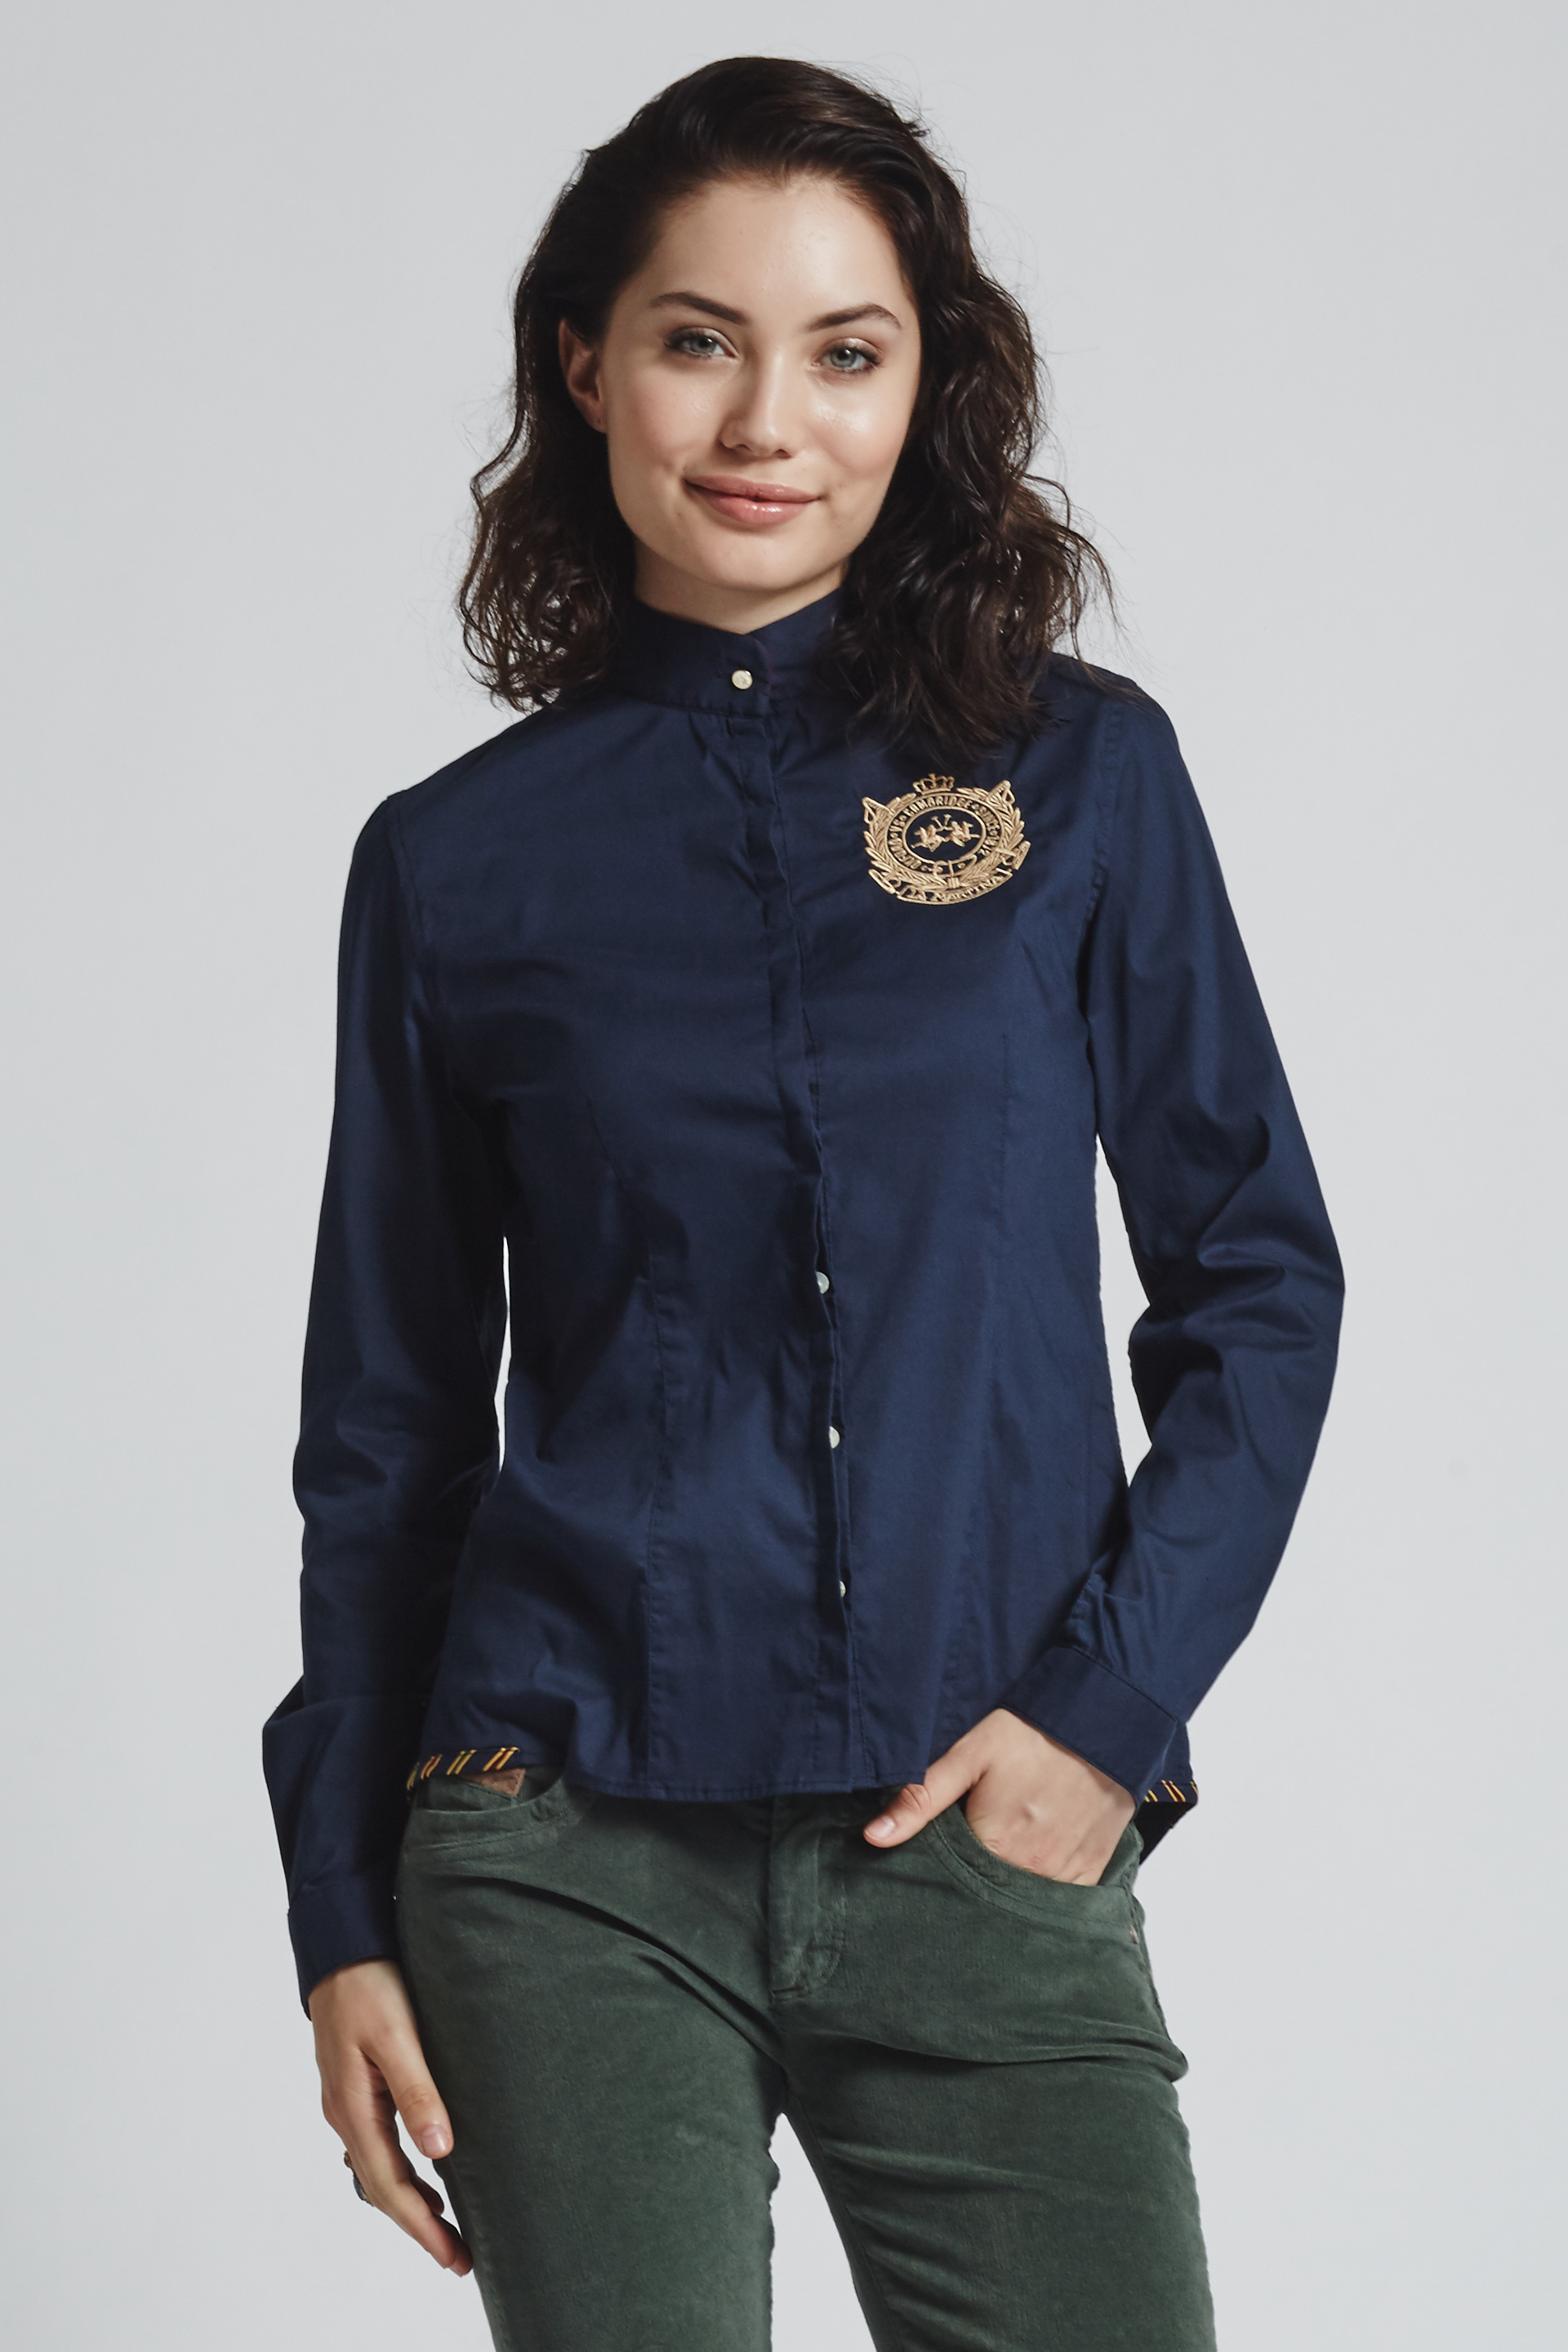 La Martina | Lucy Long sleeve blouse | Women's blouses & shirts ...